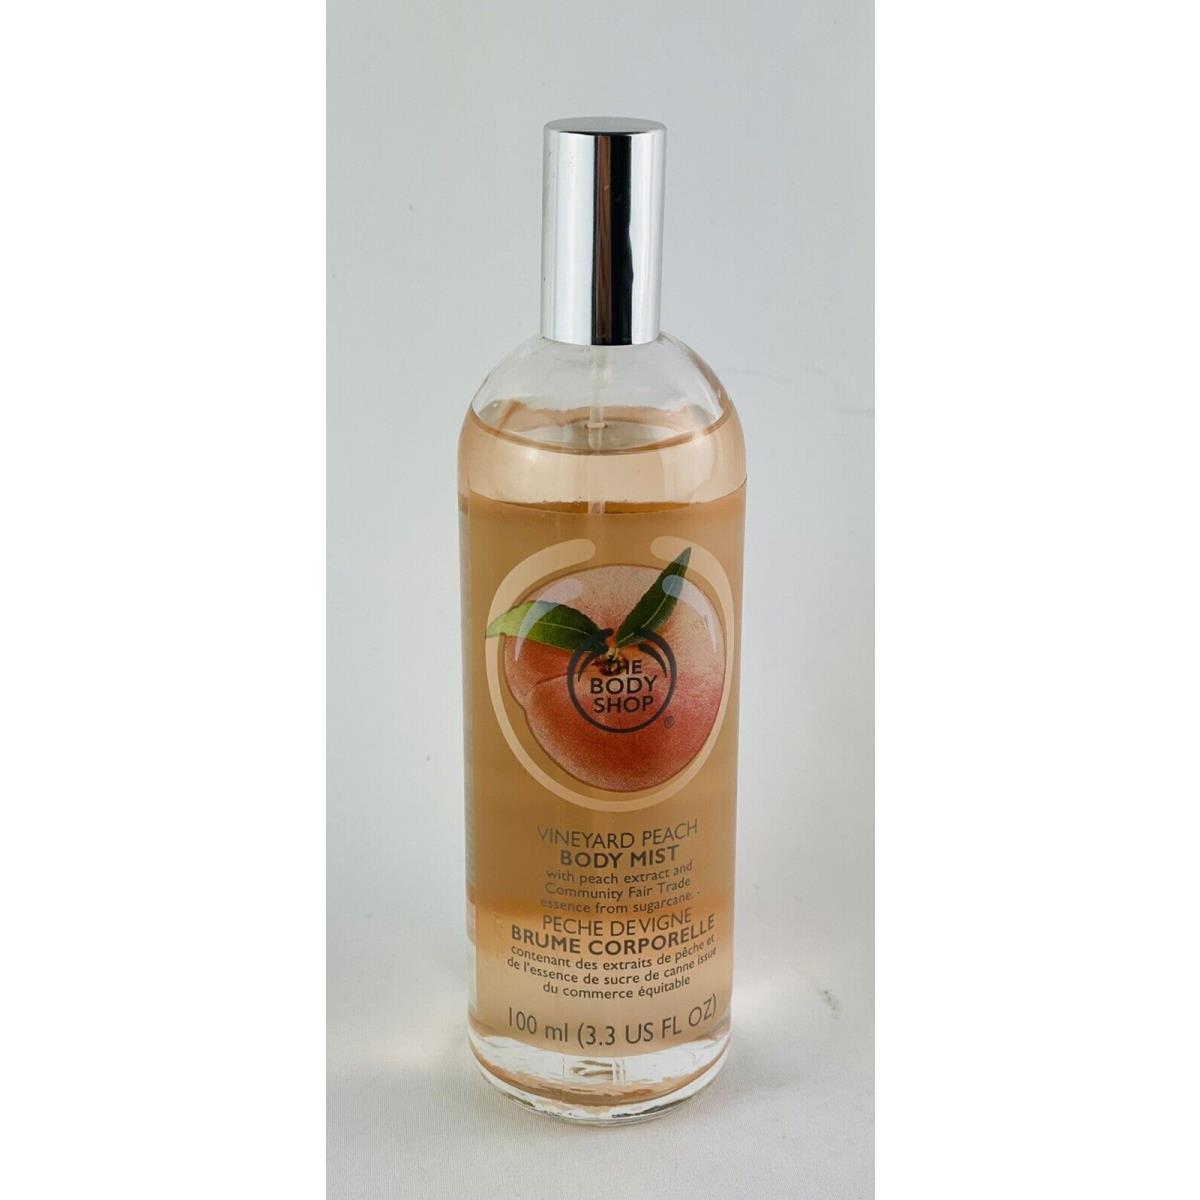 The Body Shop Vineyard Peach Body Mist 3.3 oz/100ml